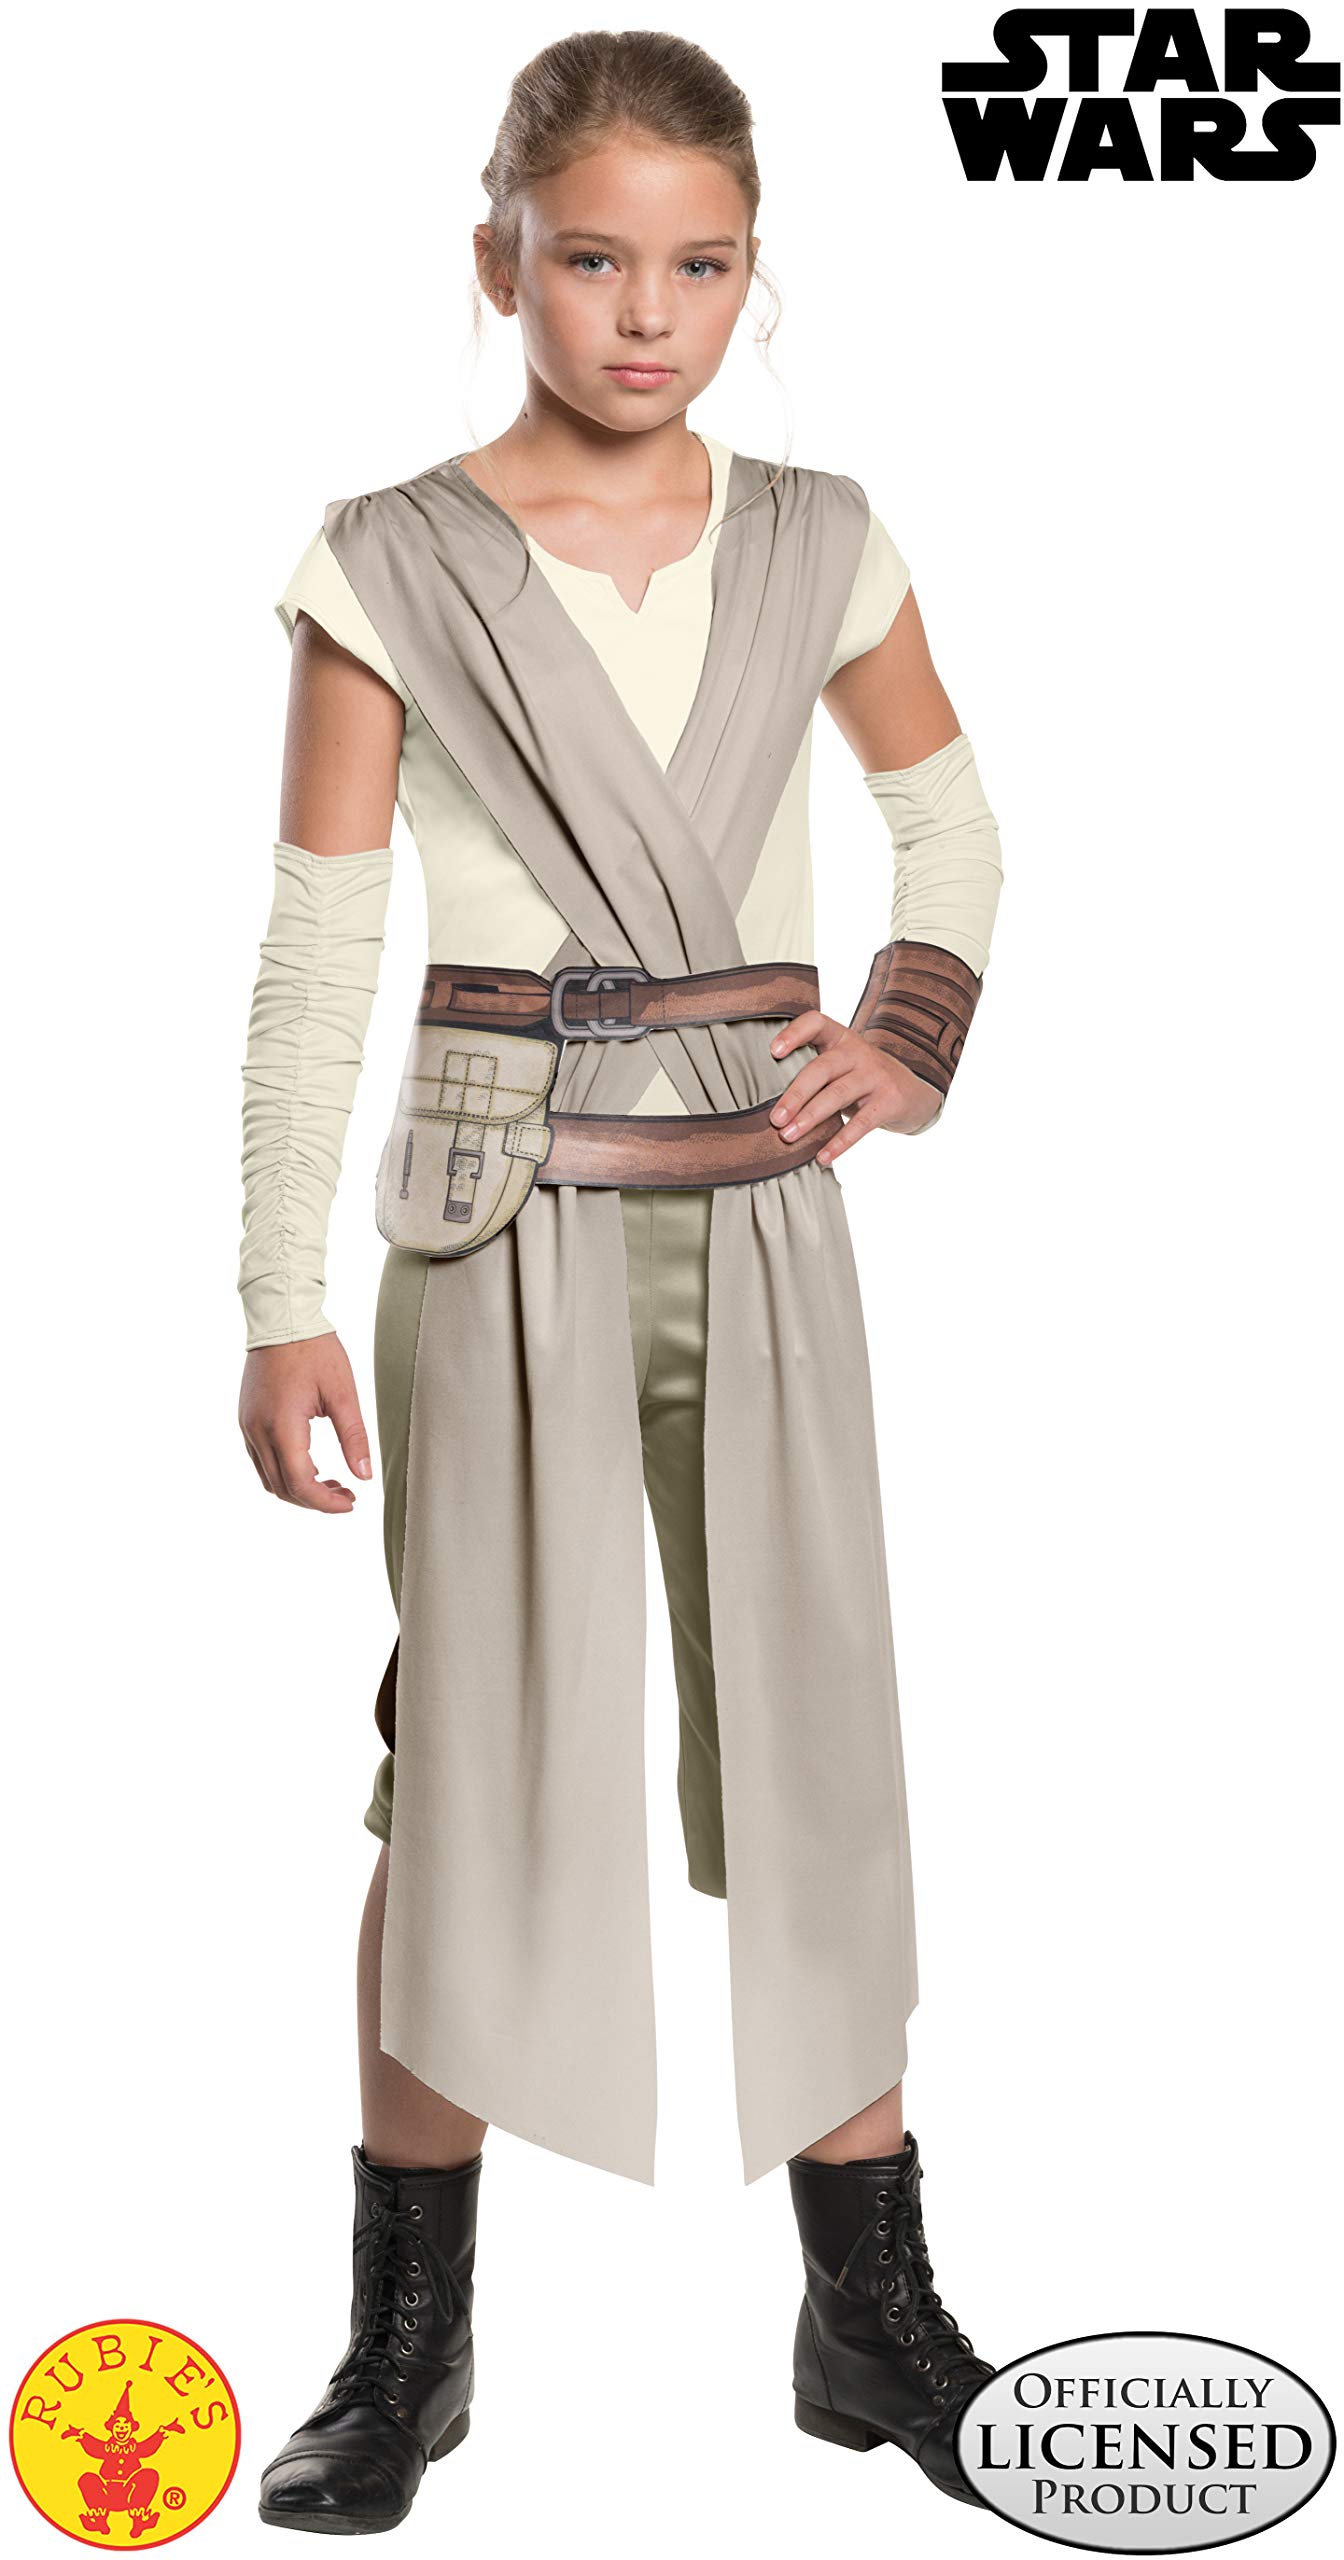 Star Wars: The Force Awakens Child's Rey Costume, Medium